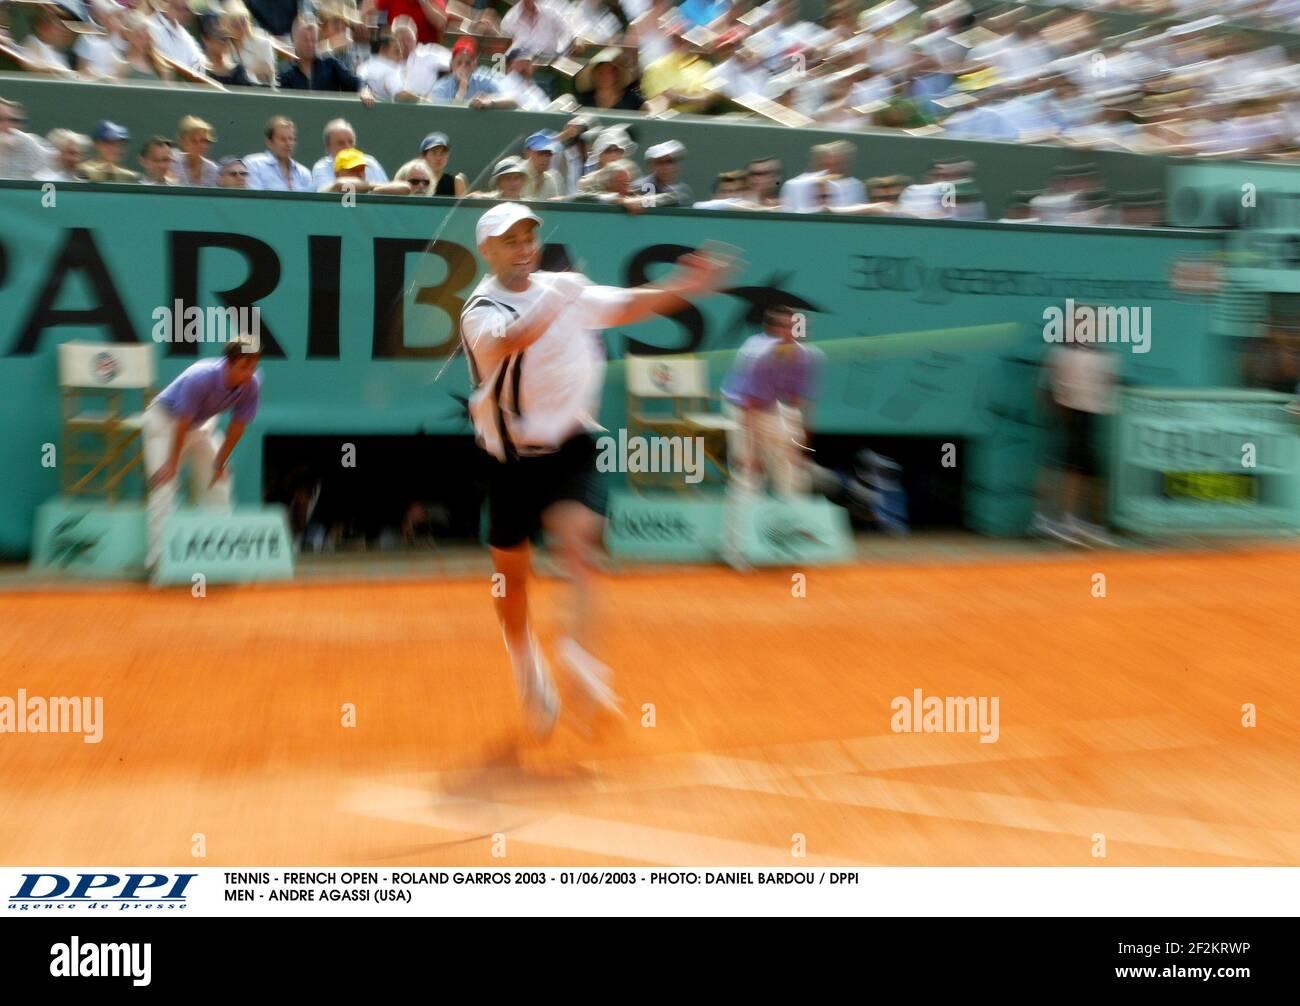 TENNIS - FRENCH OPEN - ROLAND GARROS 2003 - 01/06/2003 - PHOTO: DANIEL BARDOU / DPPI MEN - ANDRE AGASSI (USA) Stock Photo